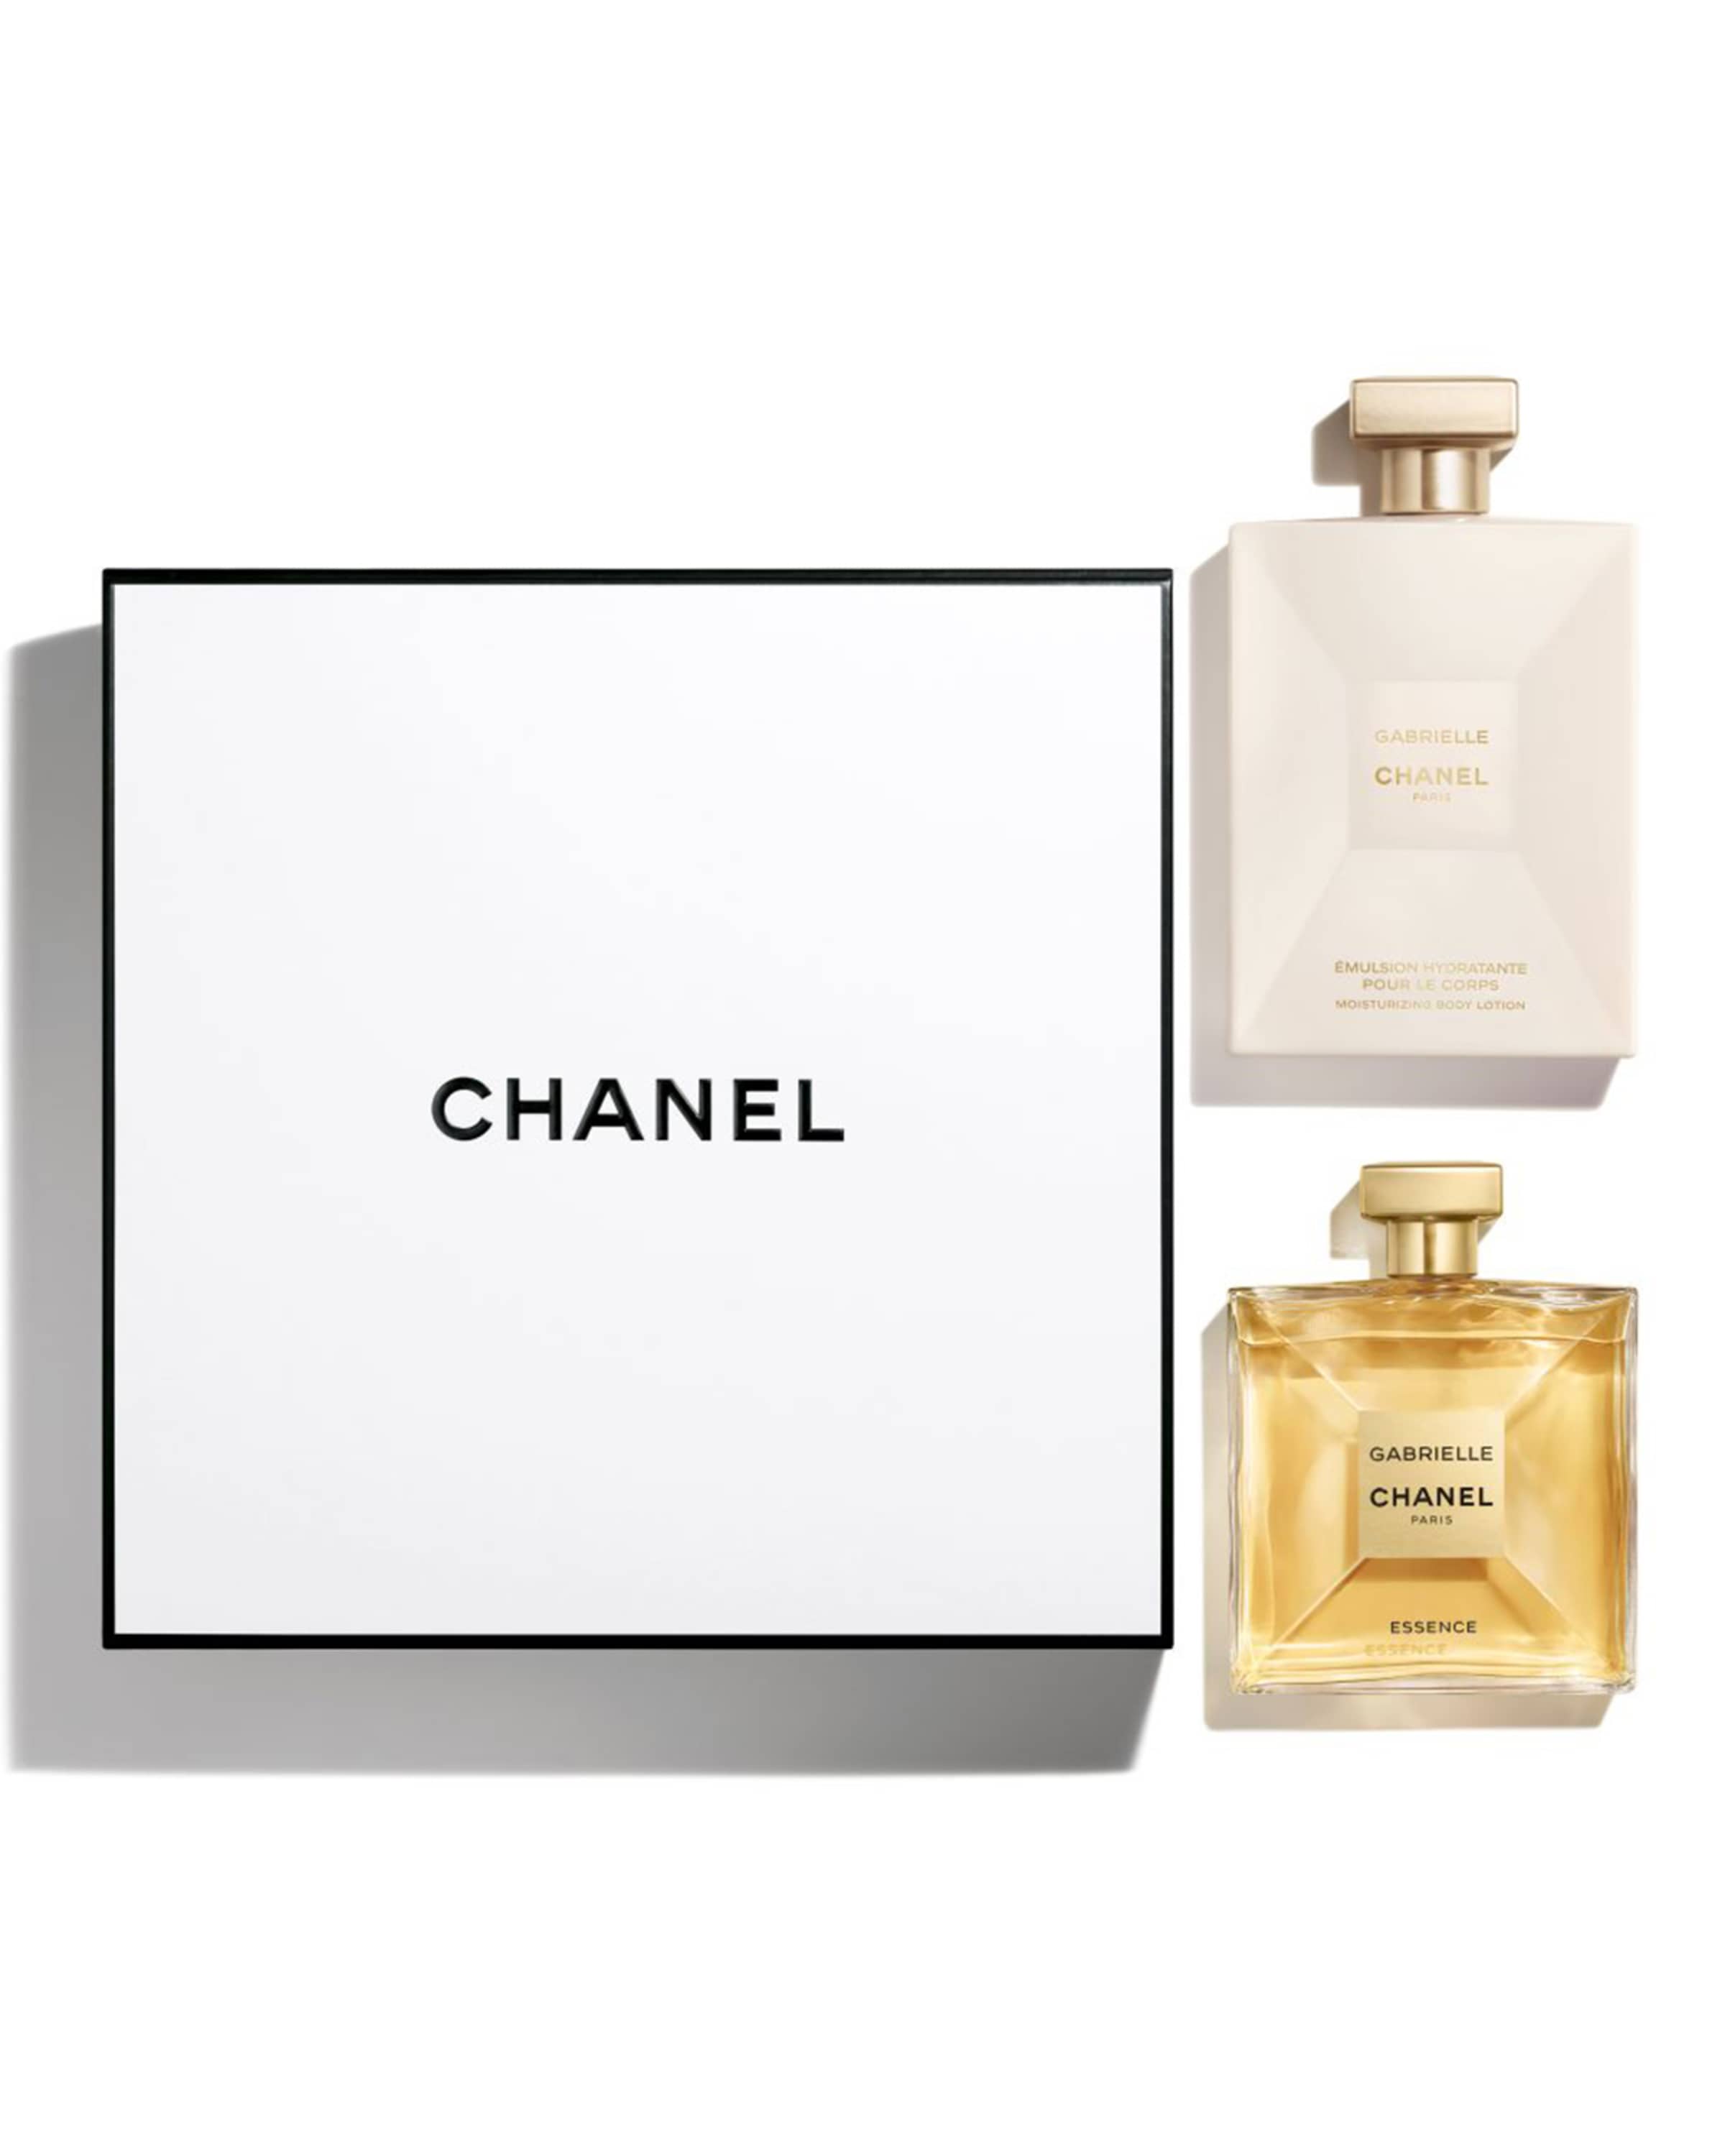 Chanel Gabrielle Chanel Essence Body Lotion Set Neiman Marcus